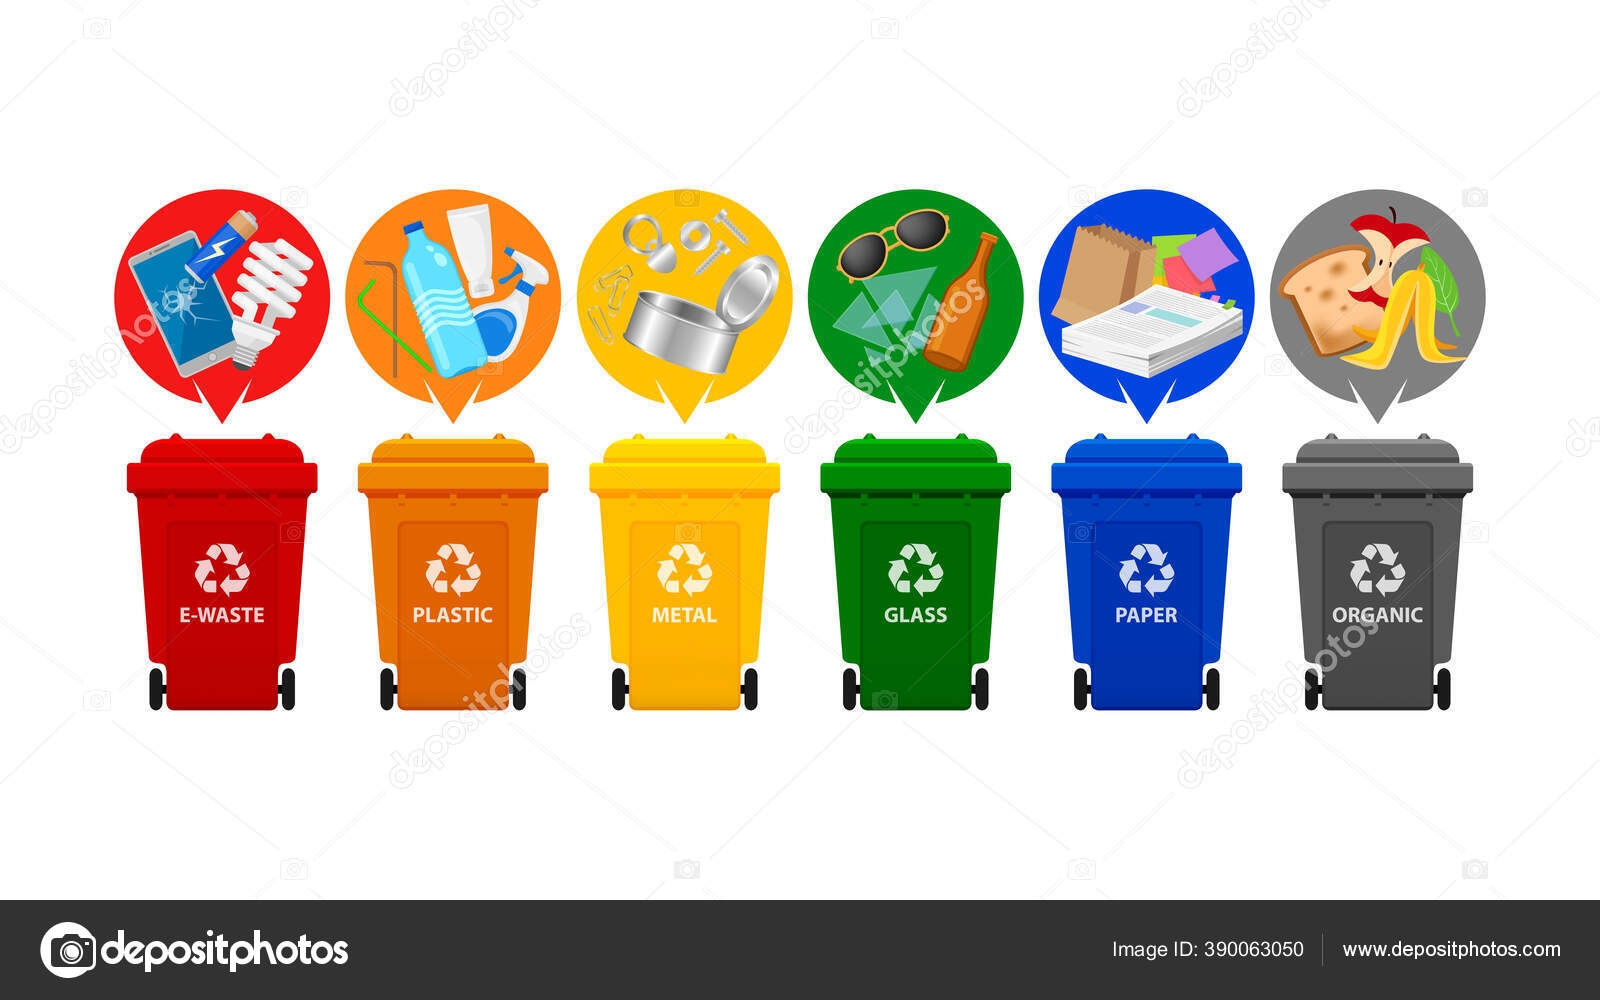 large-recycle-bins-sale-now-save-59-jlcatj-gob-mx